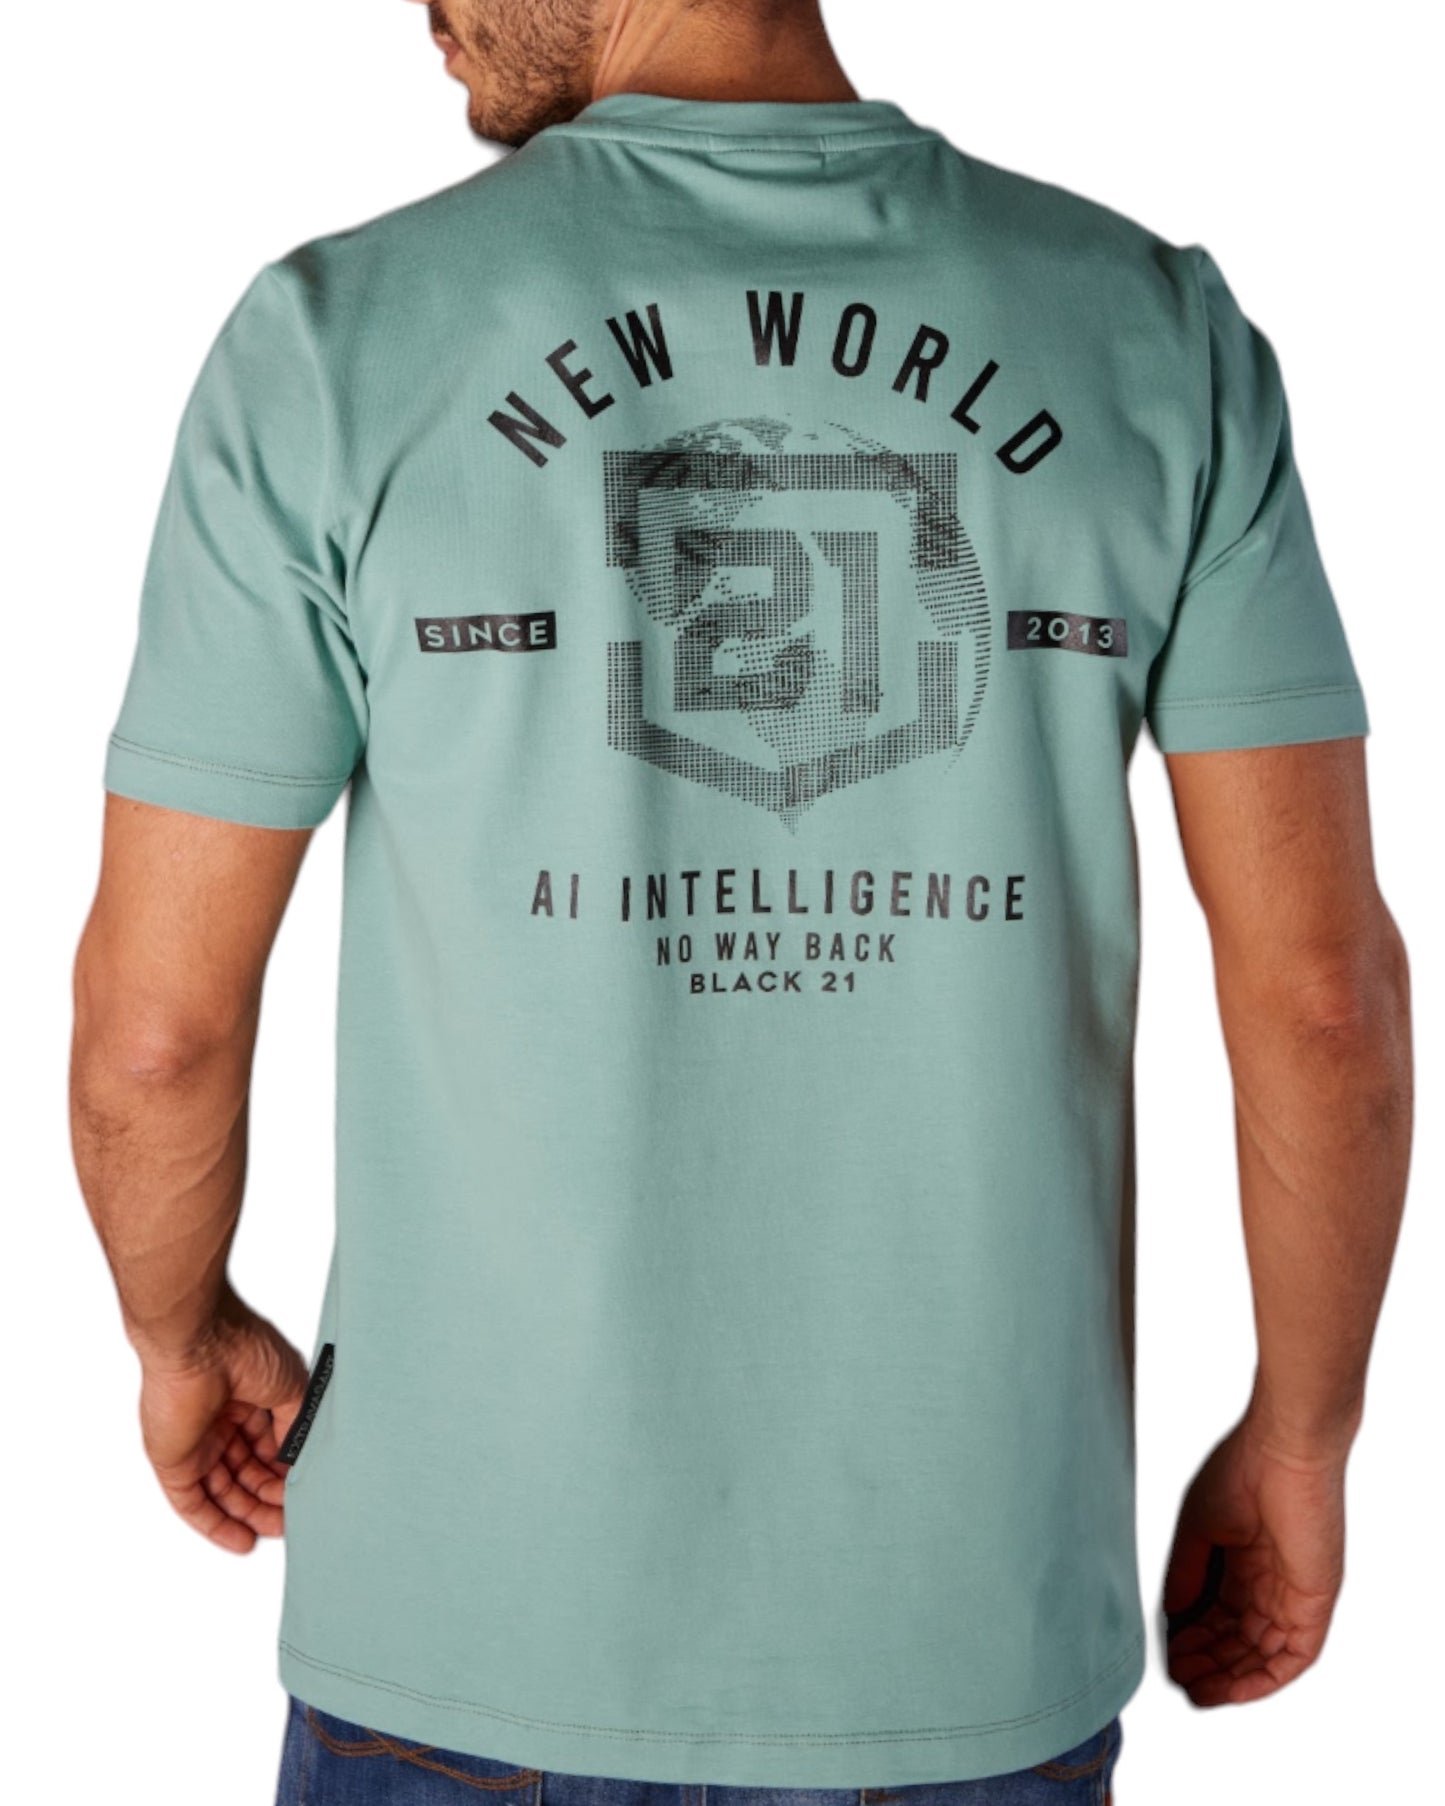 Camisetas BK21 New World